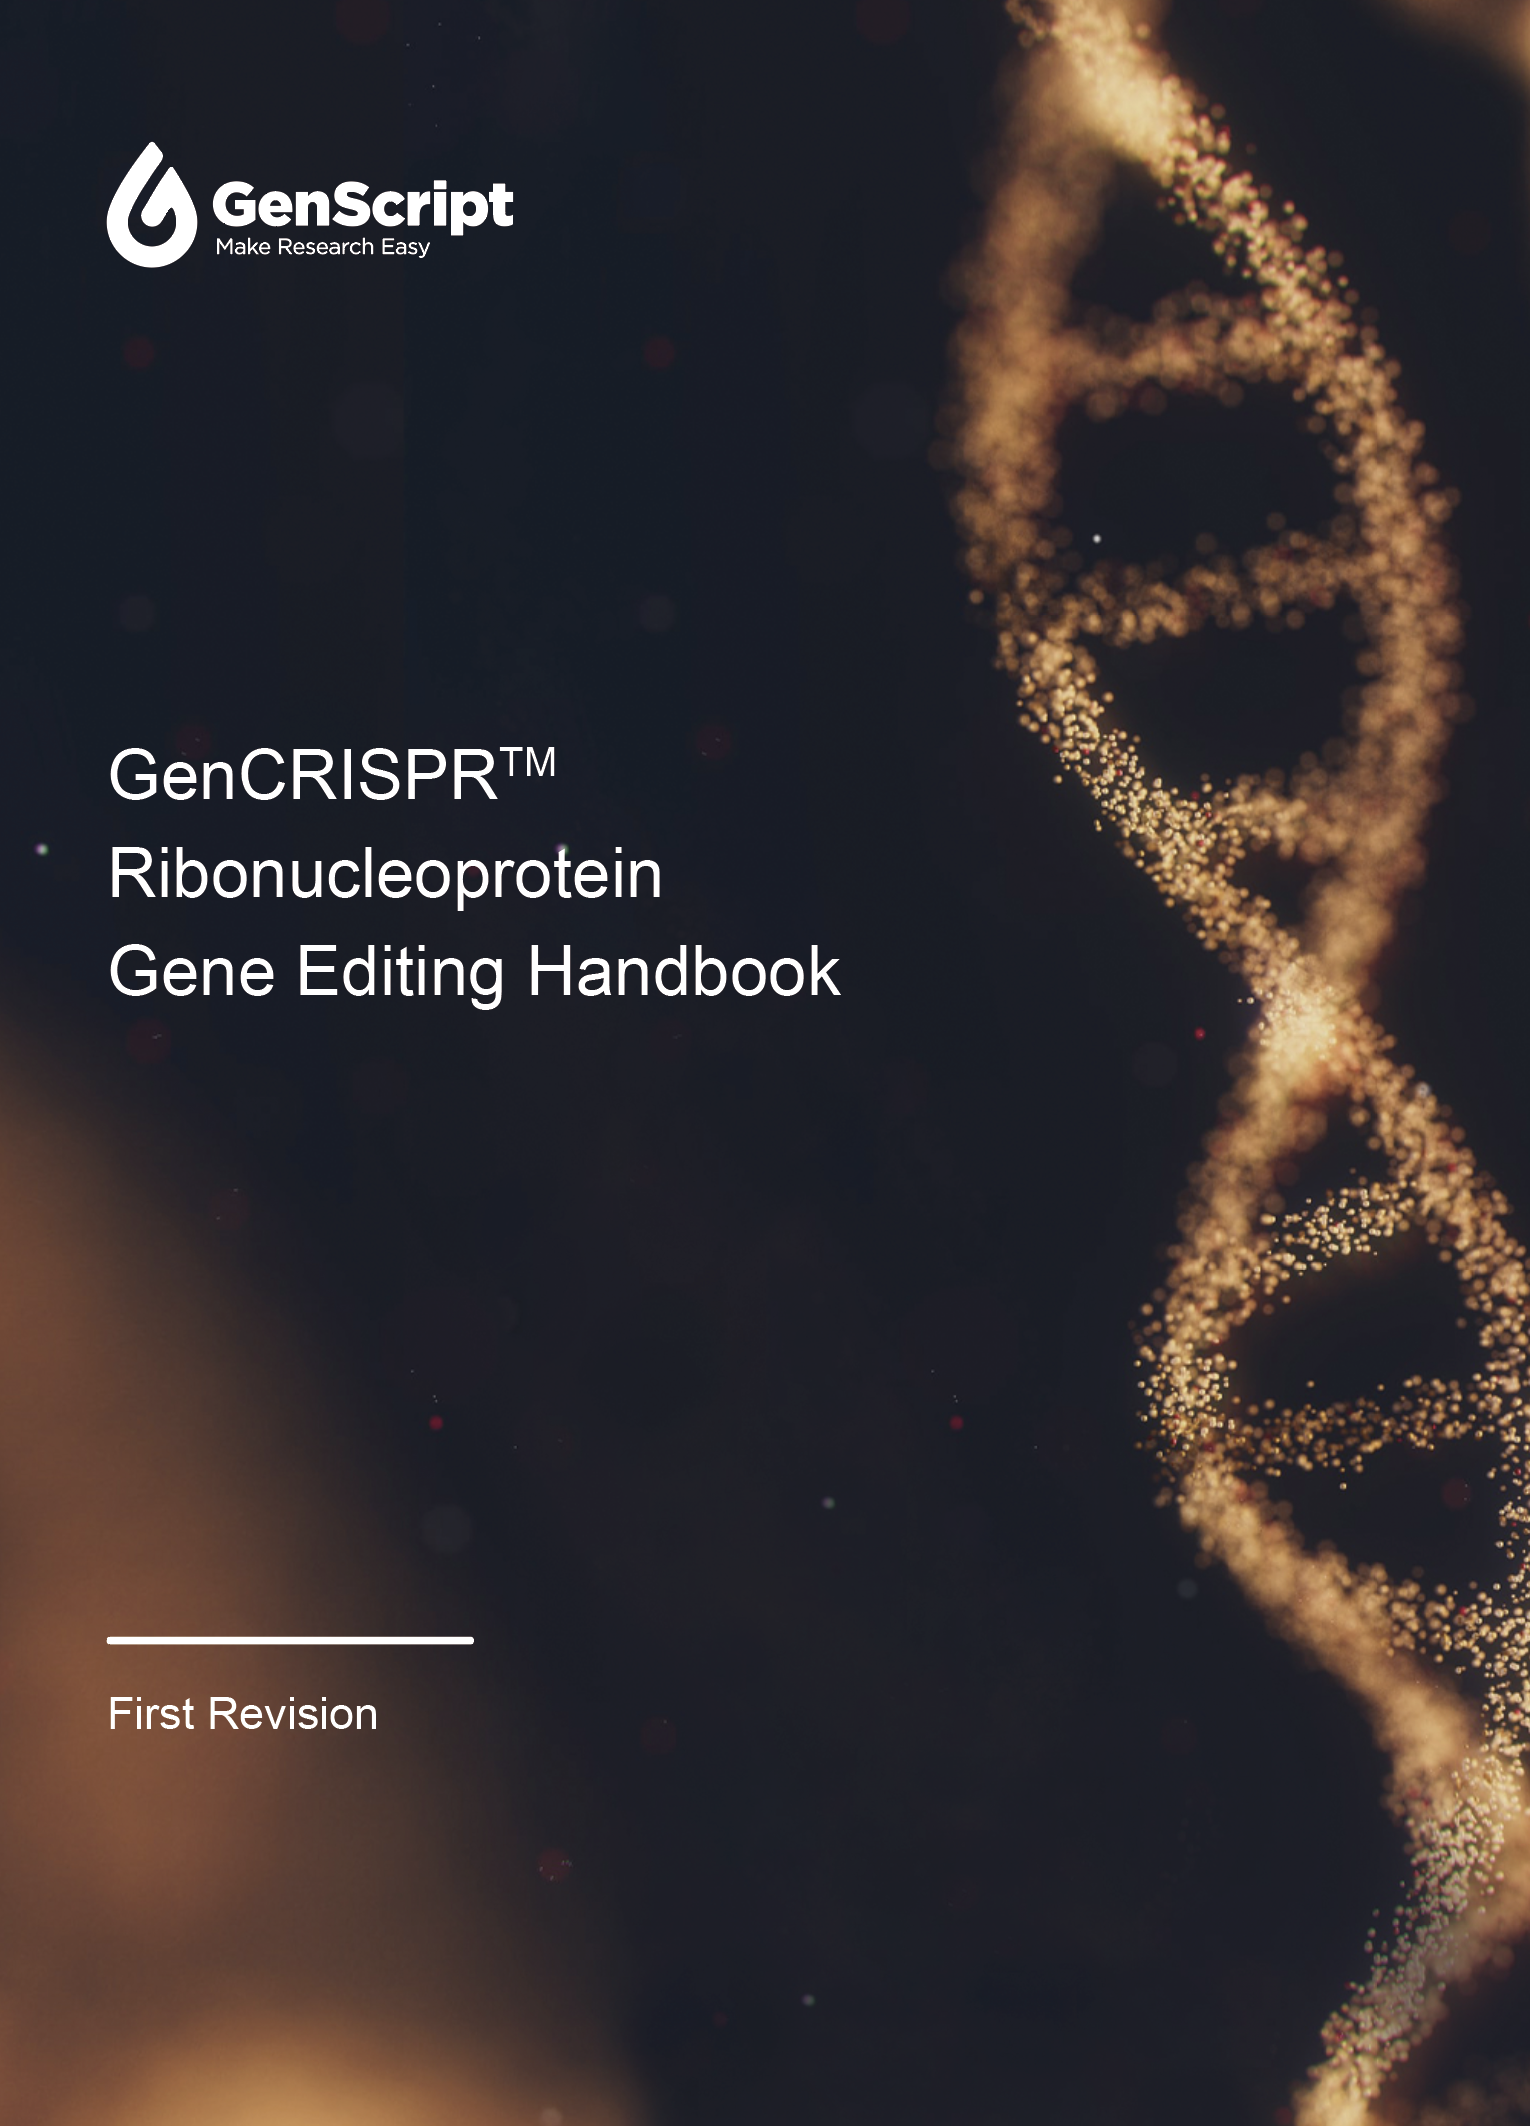 GenCRISPR Gene Editing Solutions